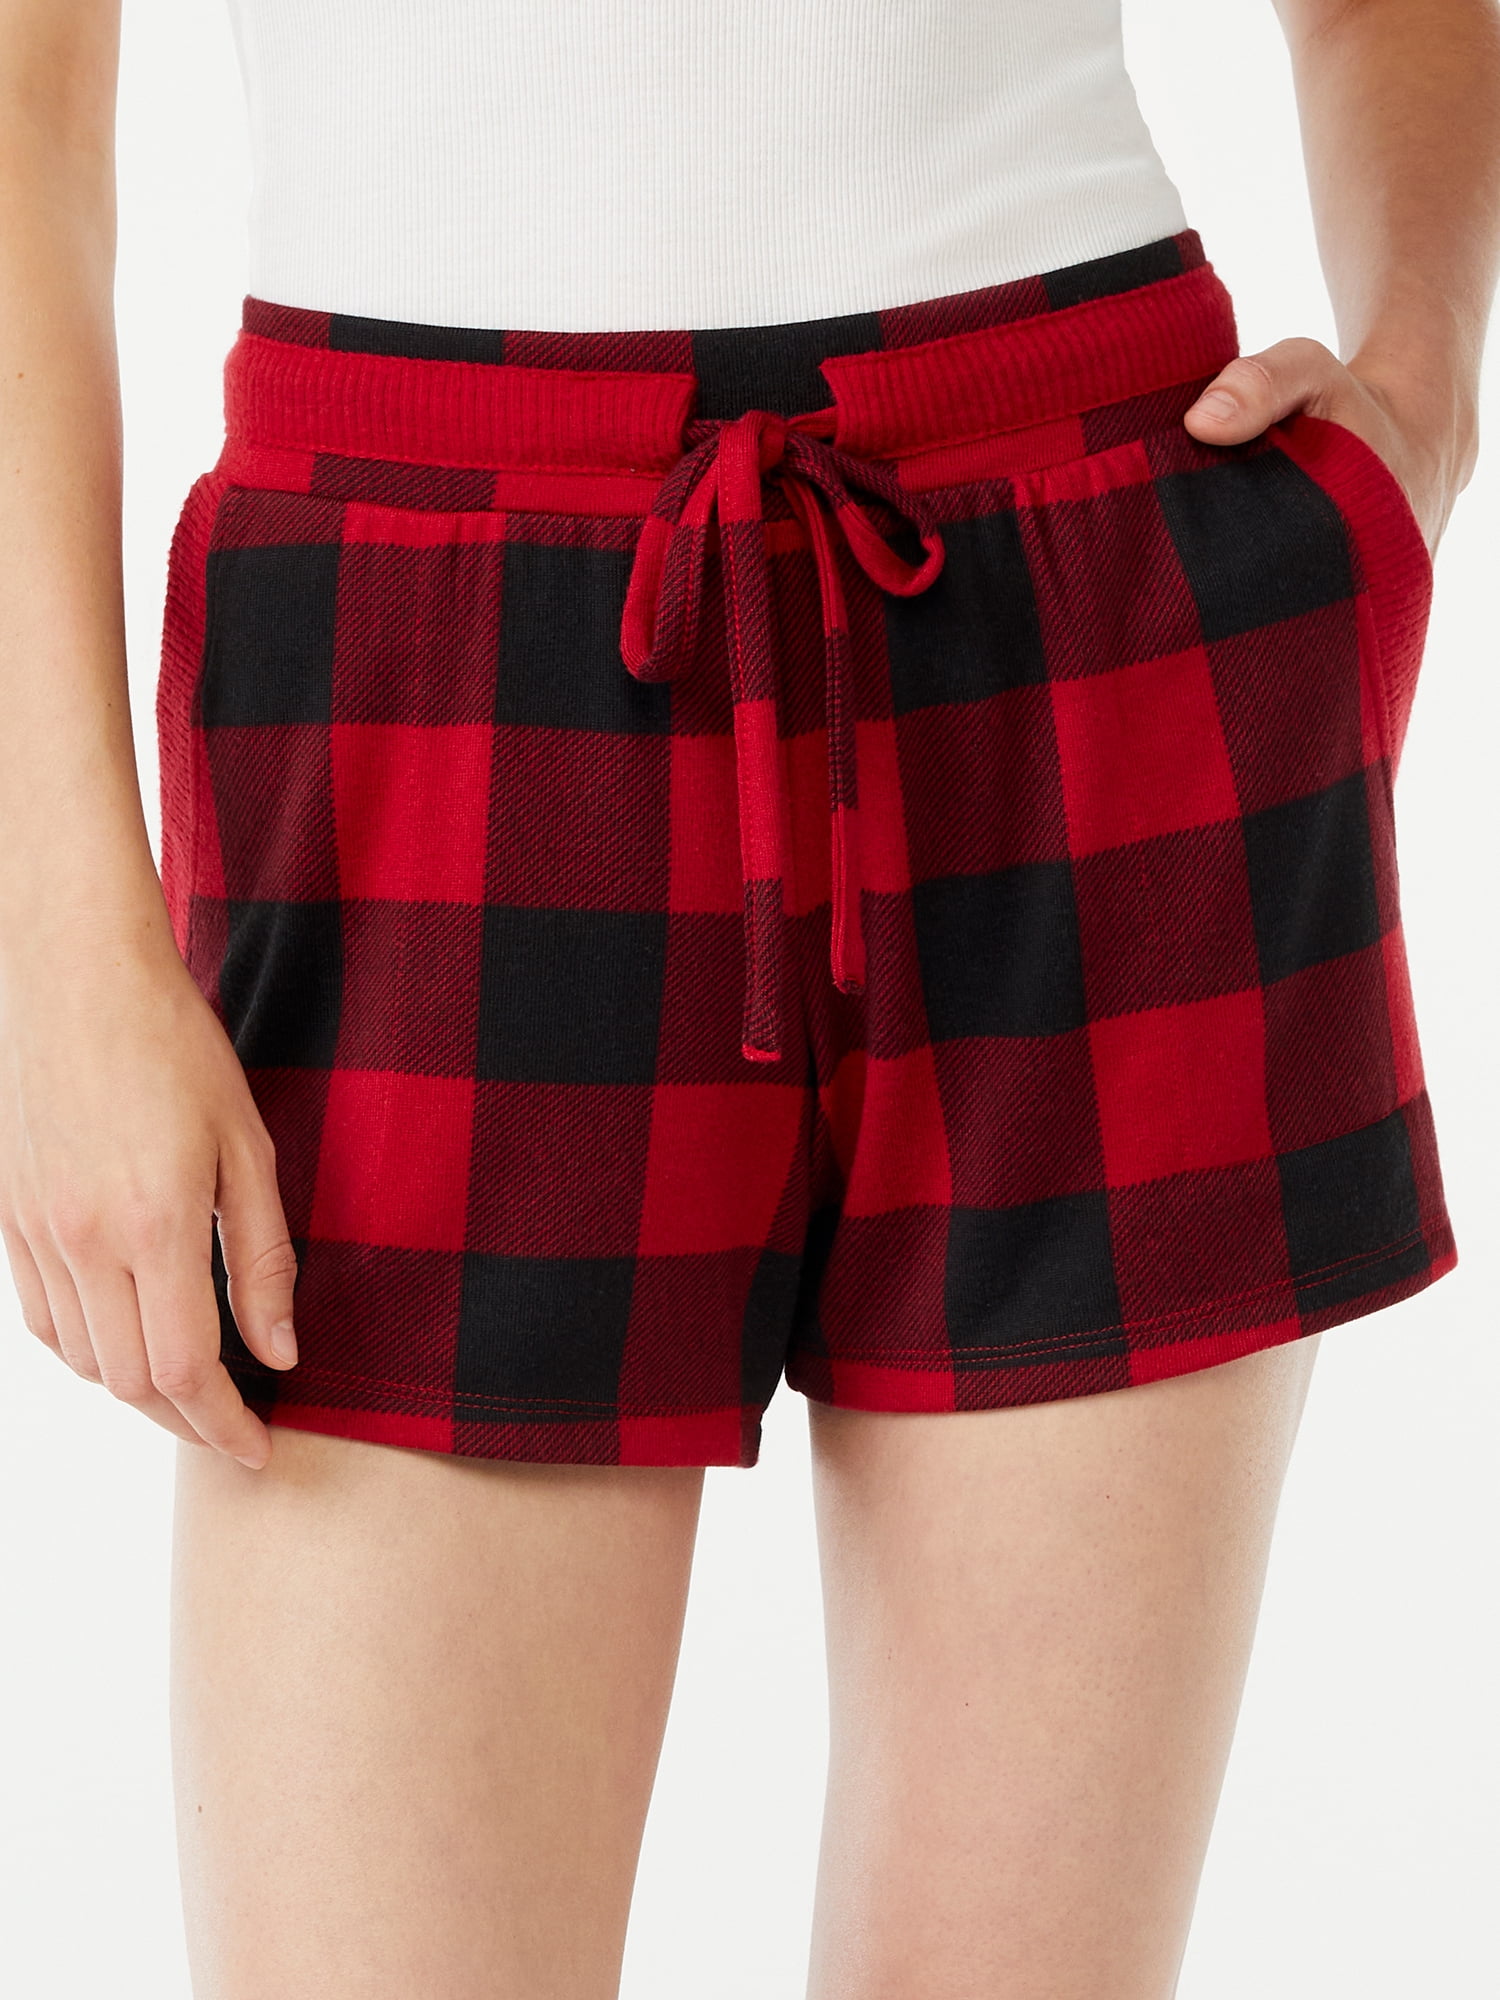 Joyspun Women's Hacci Knit Sleep Shorts, Sizes S to 3X